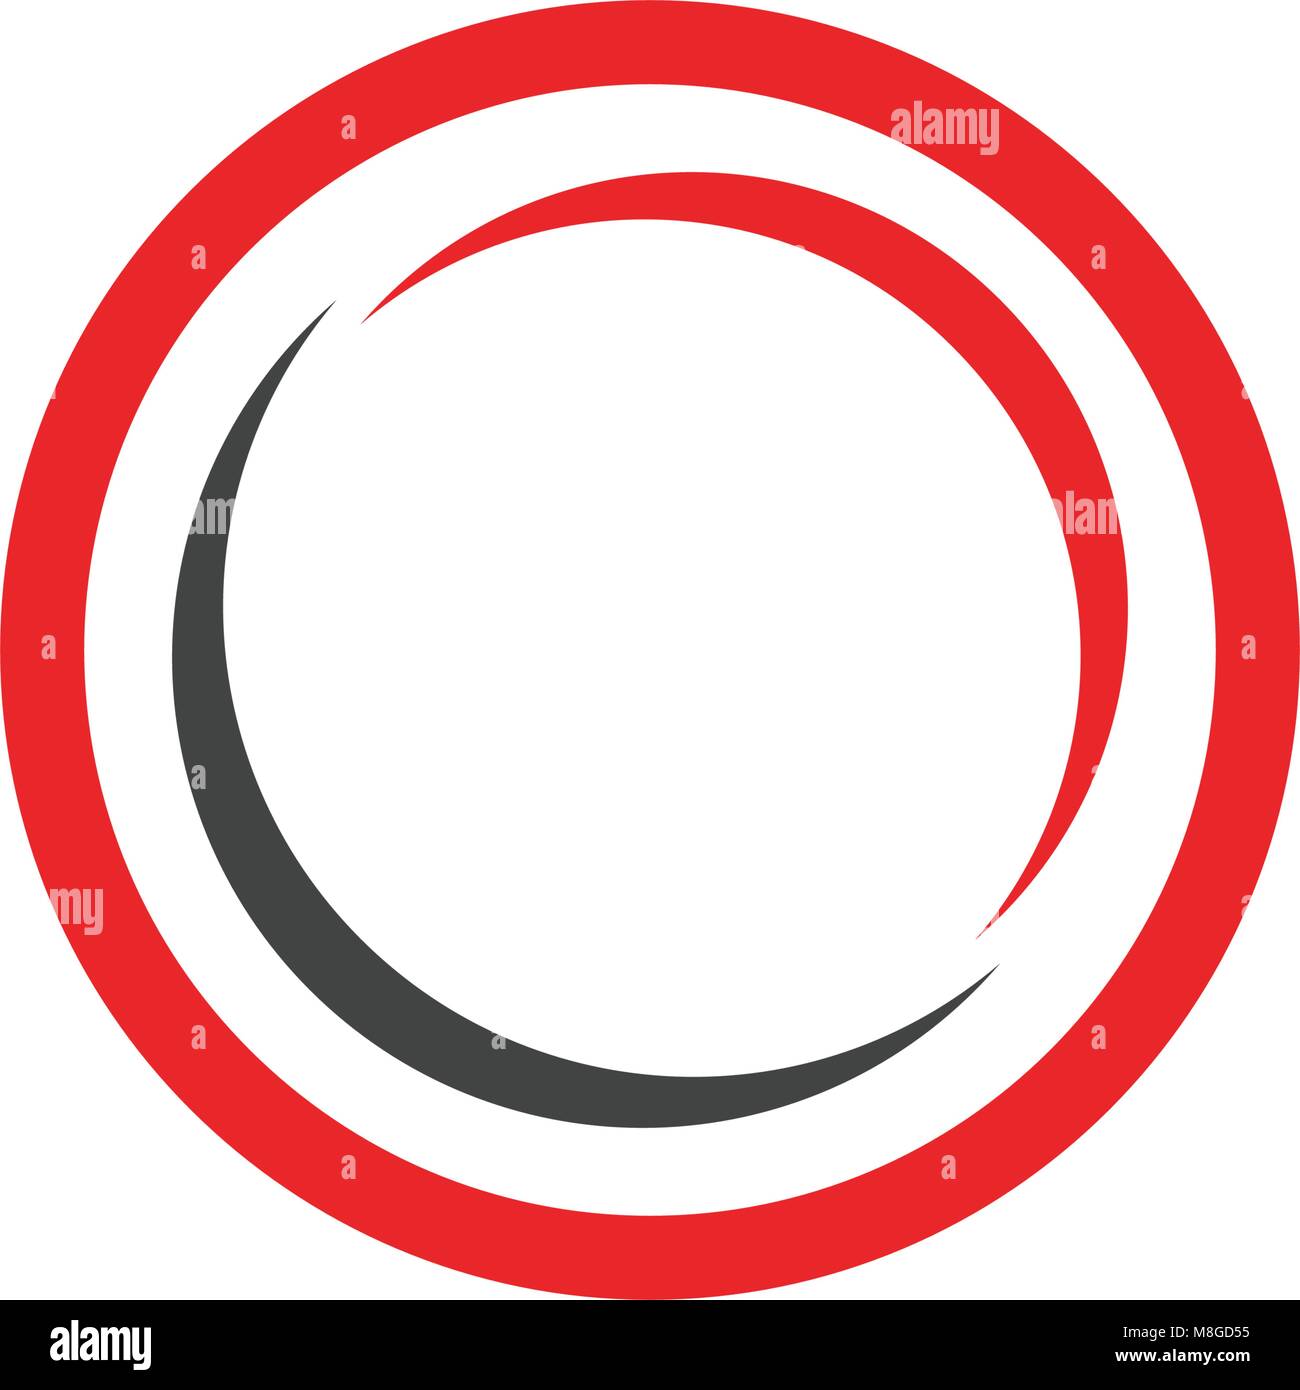 C circle logo and symbol vector Stock Vector